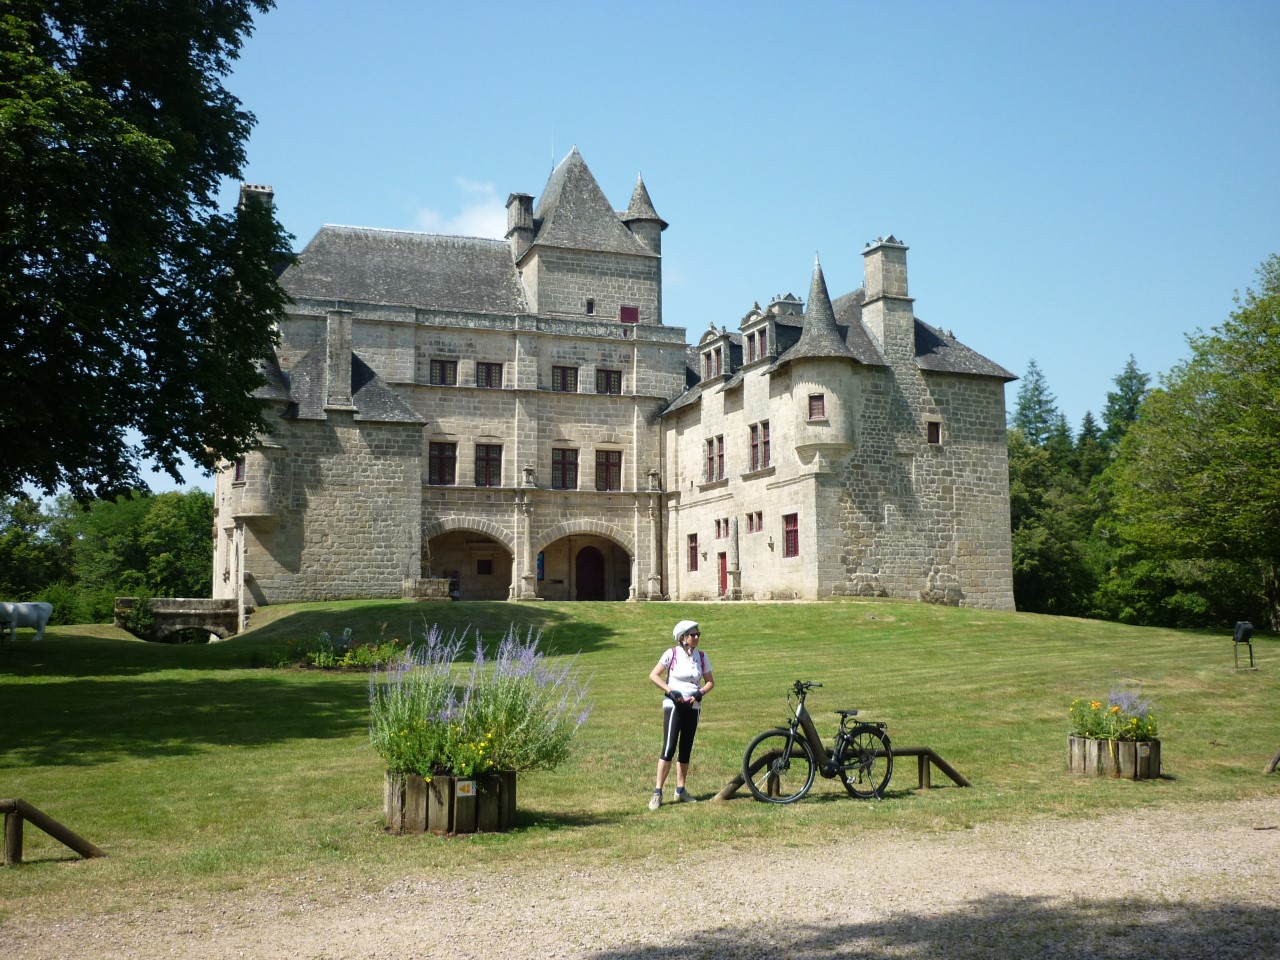 Château de Sédières